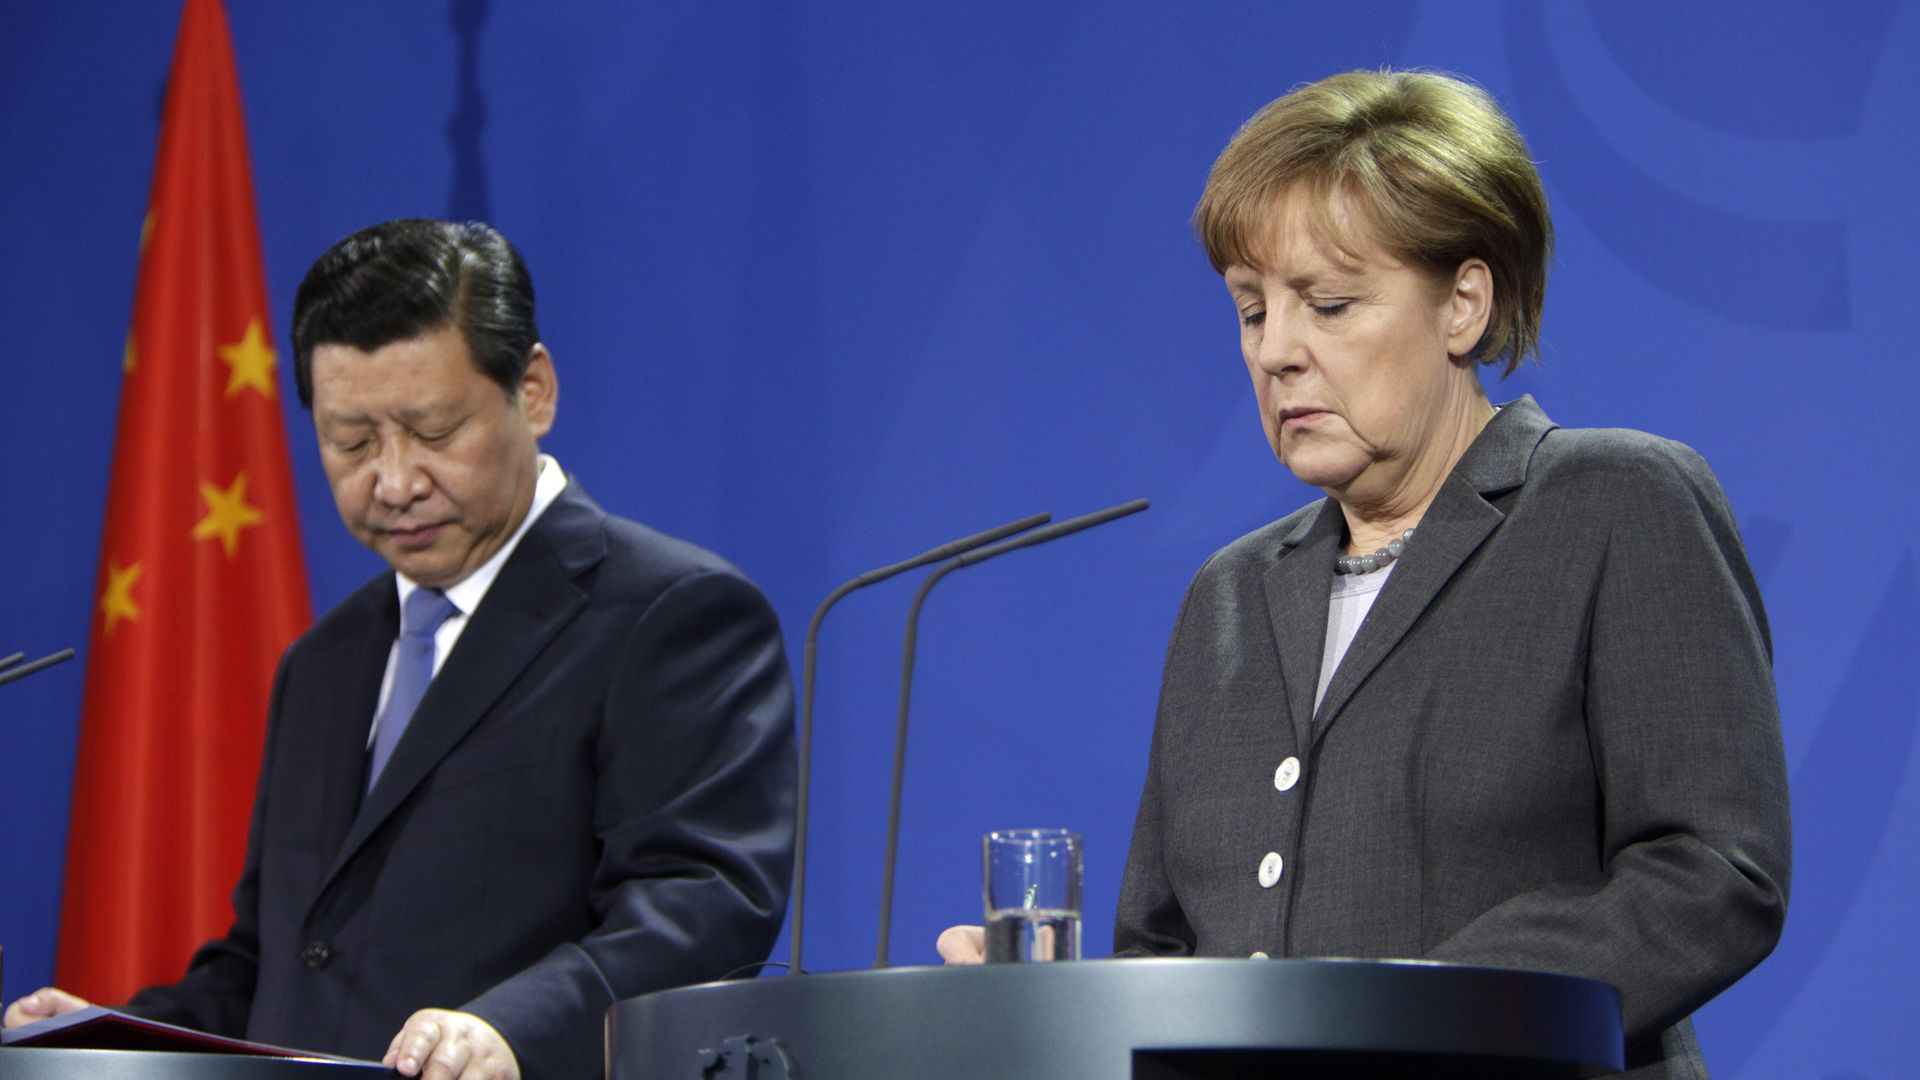 Xi and Merkel both look down